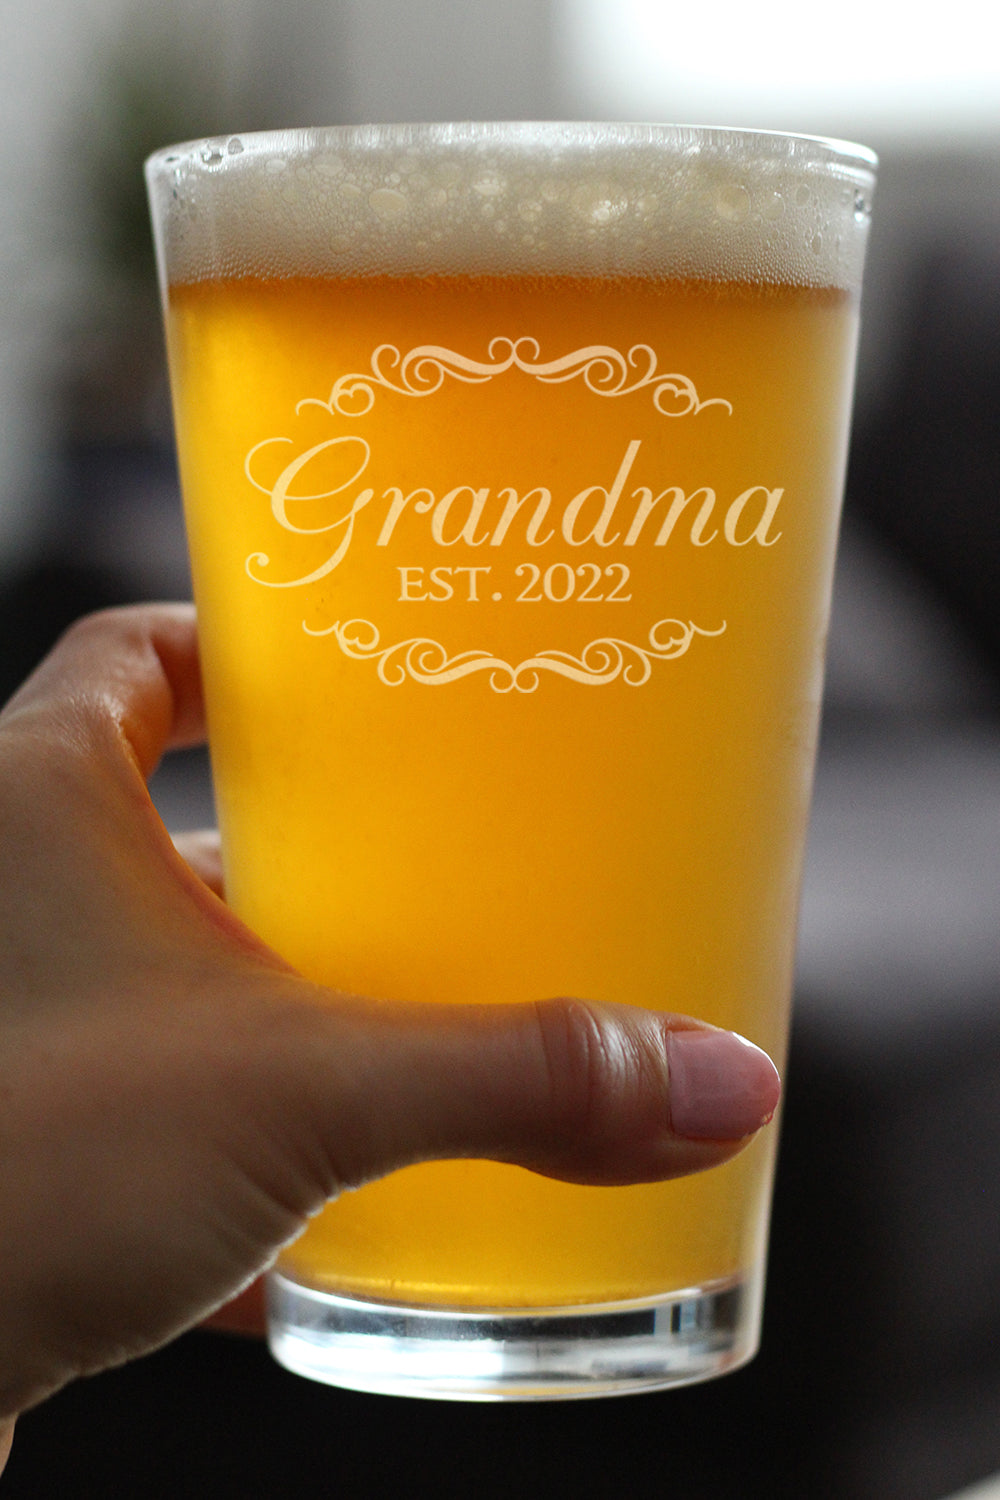 Grandma Est 2022 - New Grandmother Pint Glass Gift for First Time Grandparents - Decorative 16 Oz Glasses